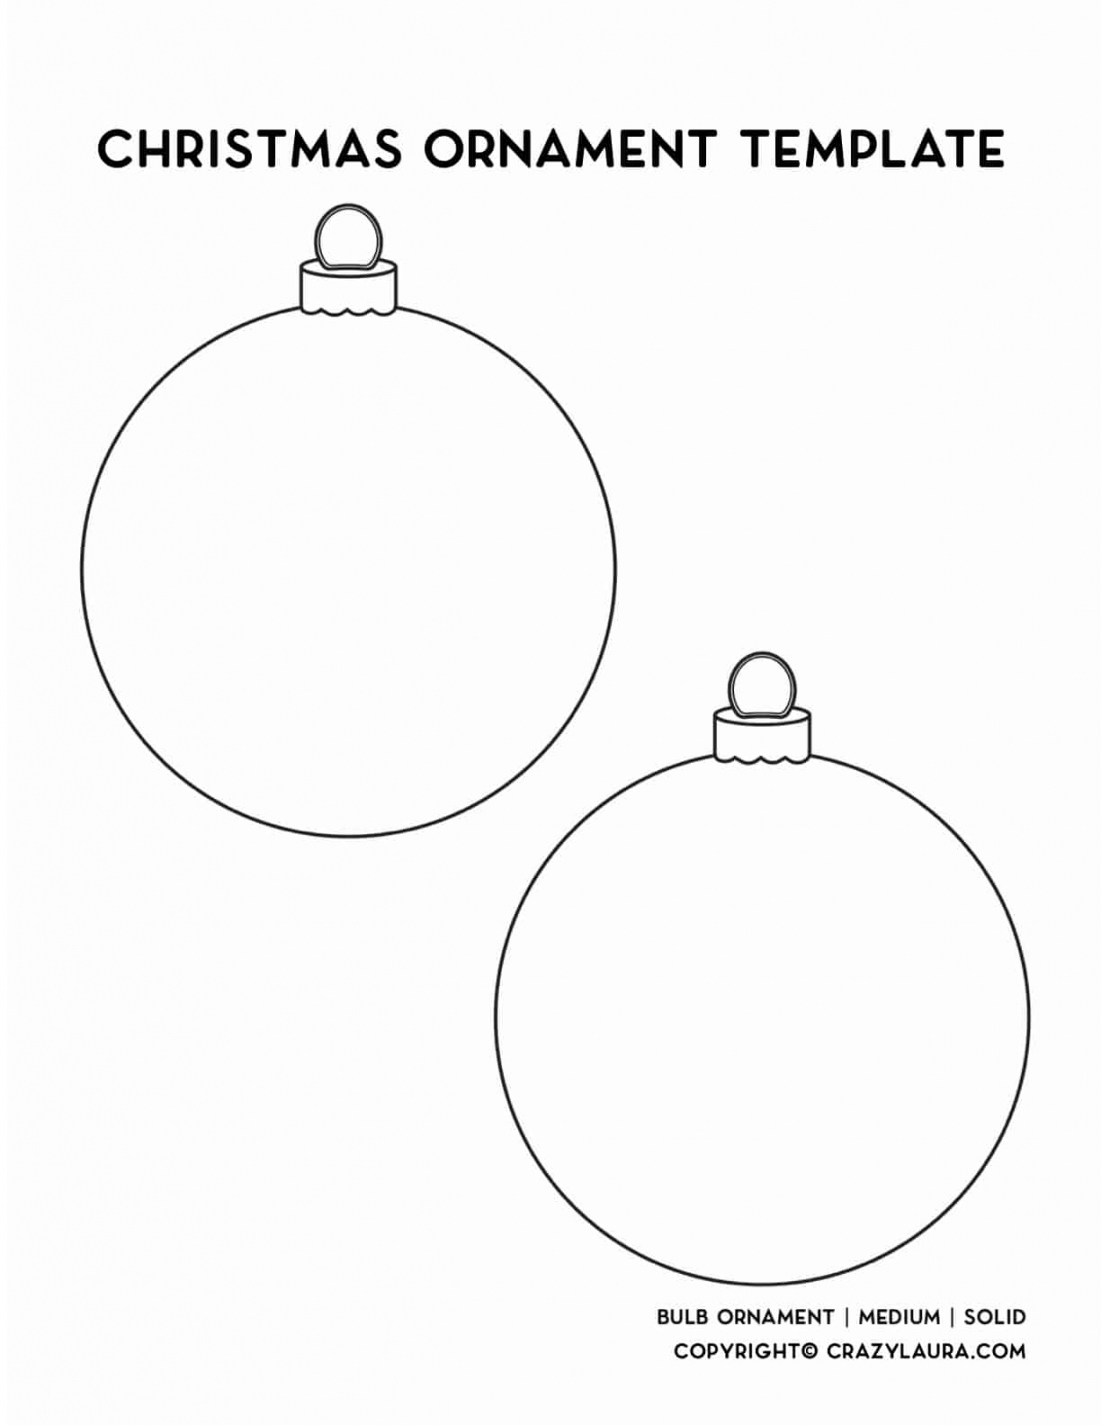 Free Christmas Ornament Template Printables & Outlines - Crazy Laura - FREE Printables - Ornament Template Free